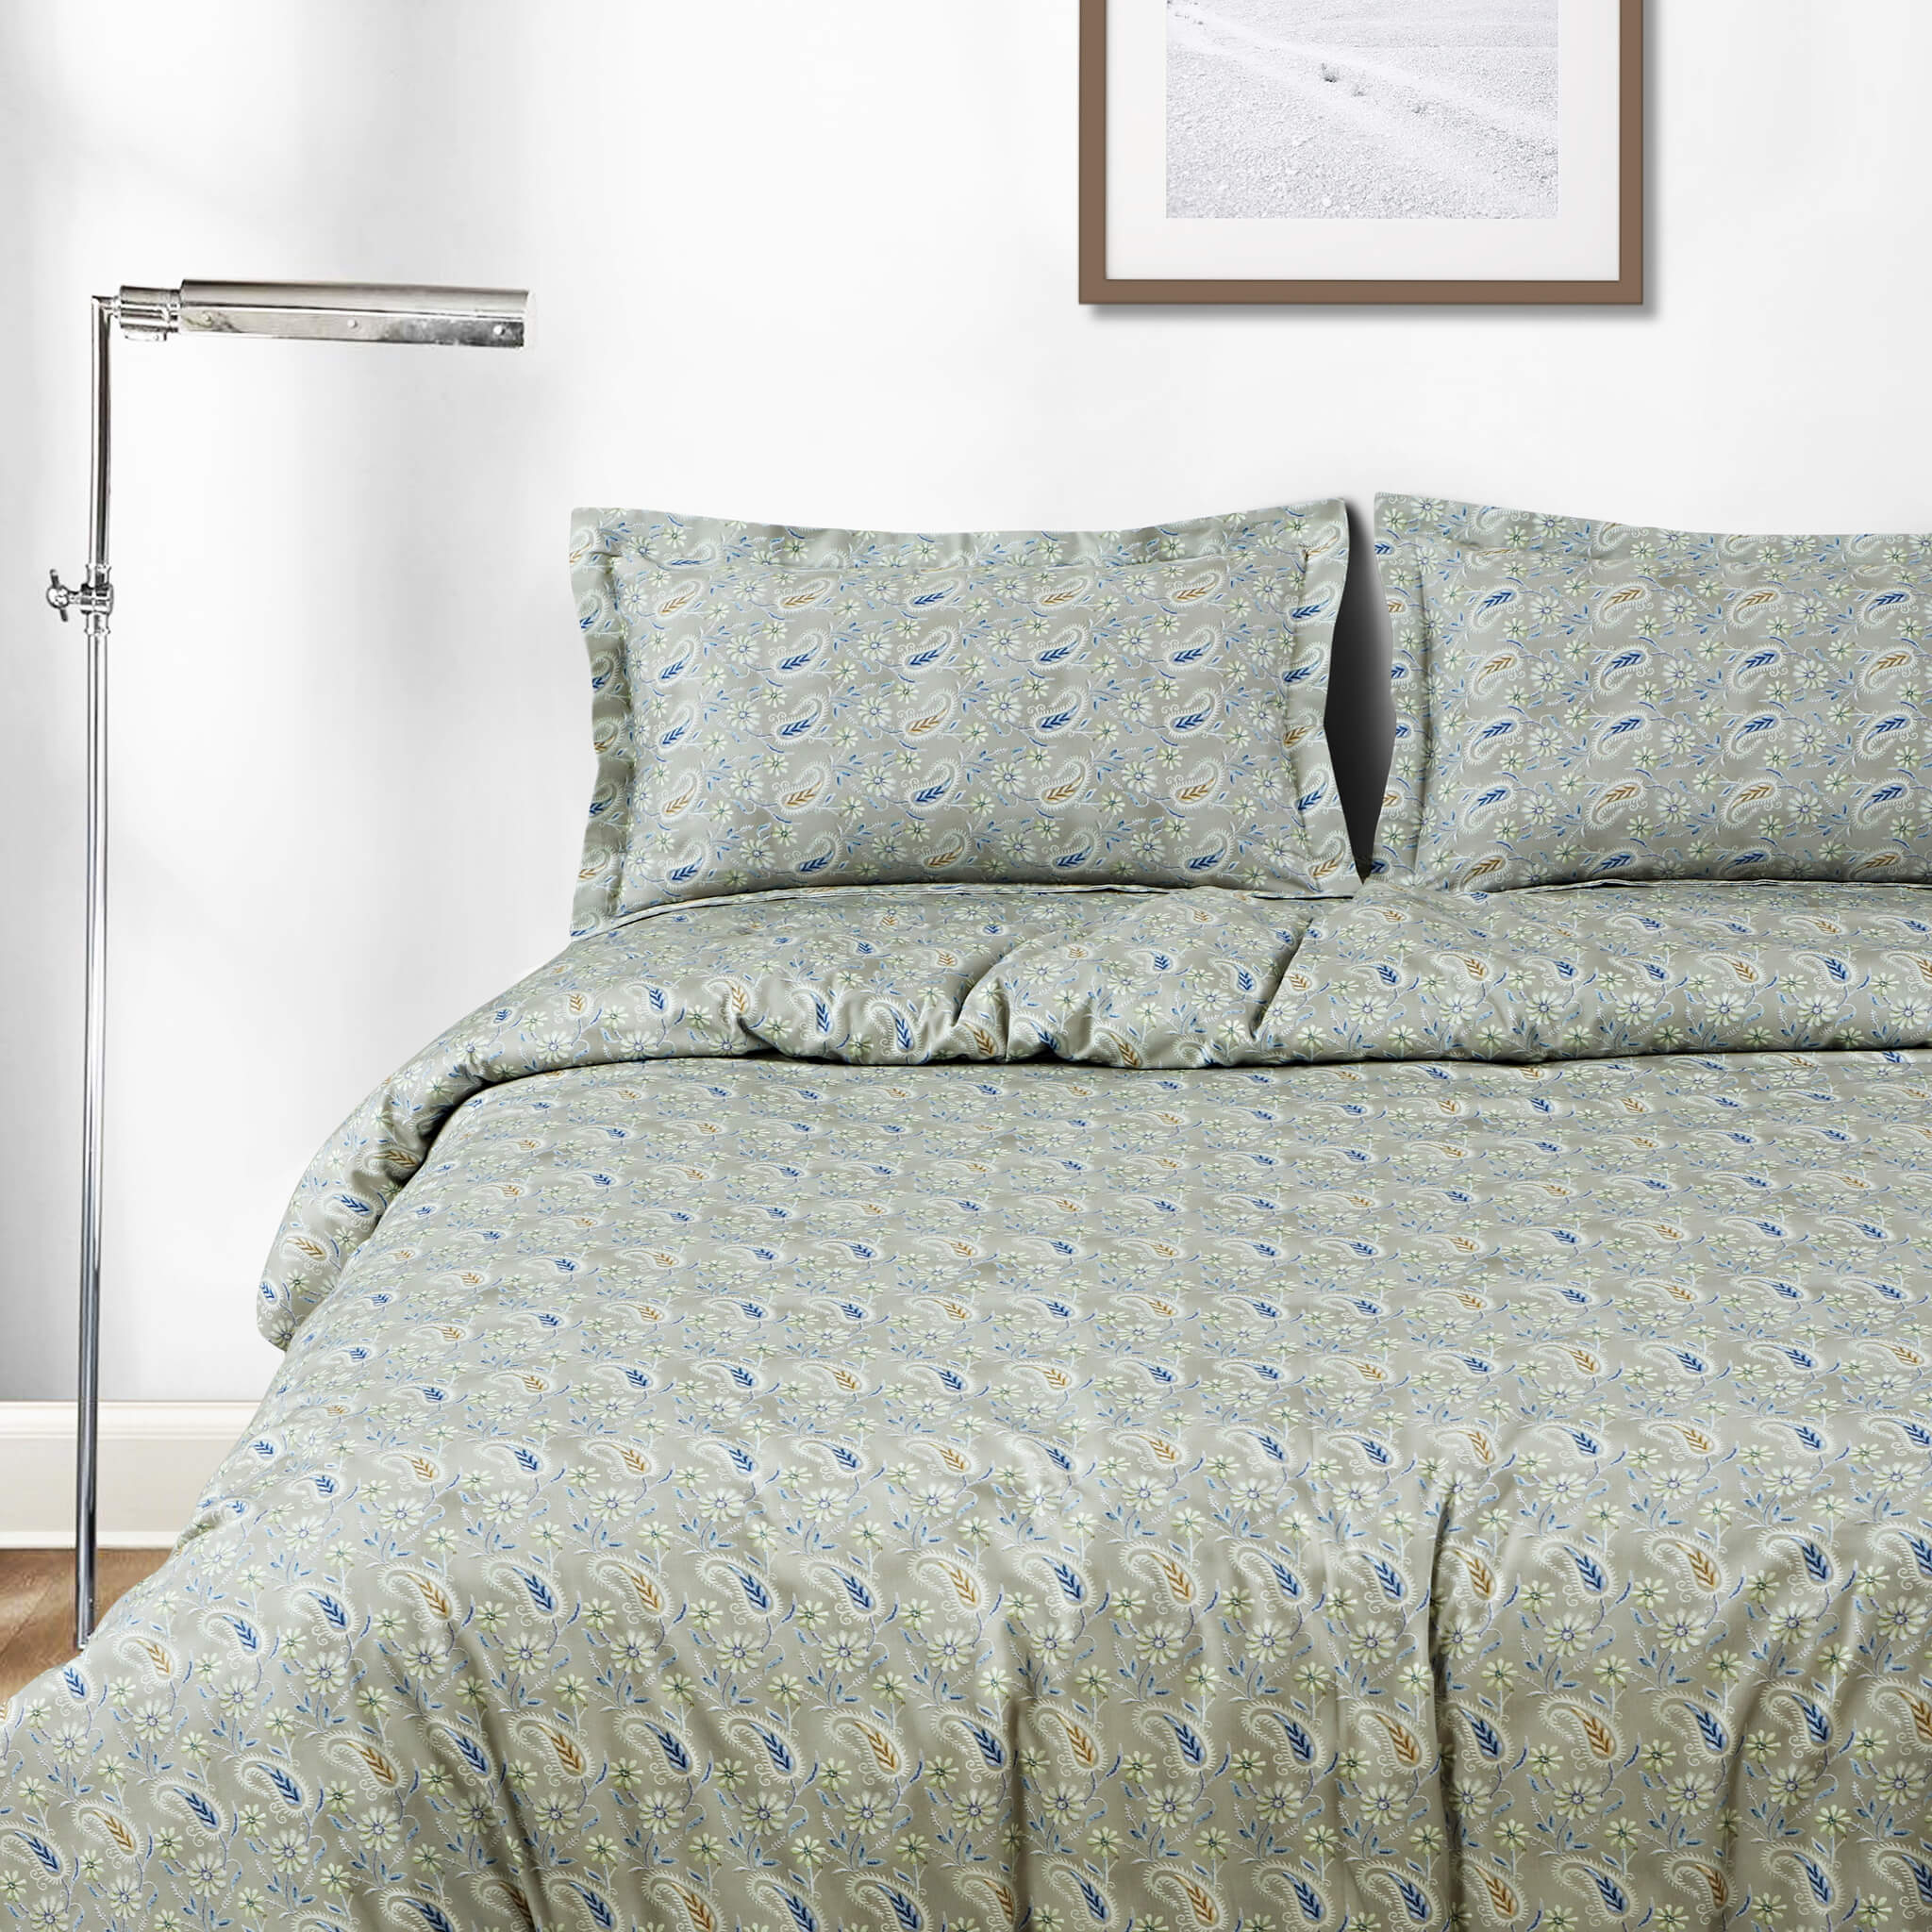 Malako Basel Bedding Set - Green Paisley 100% Cotton King Size Bedsheet With Comforter